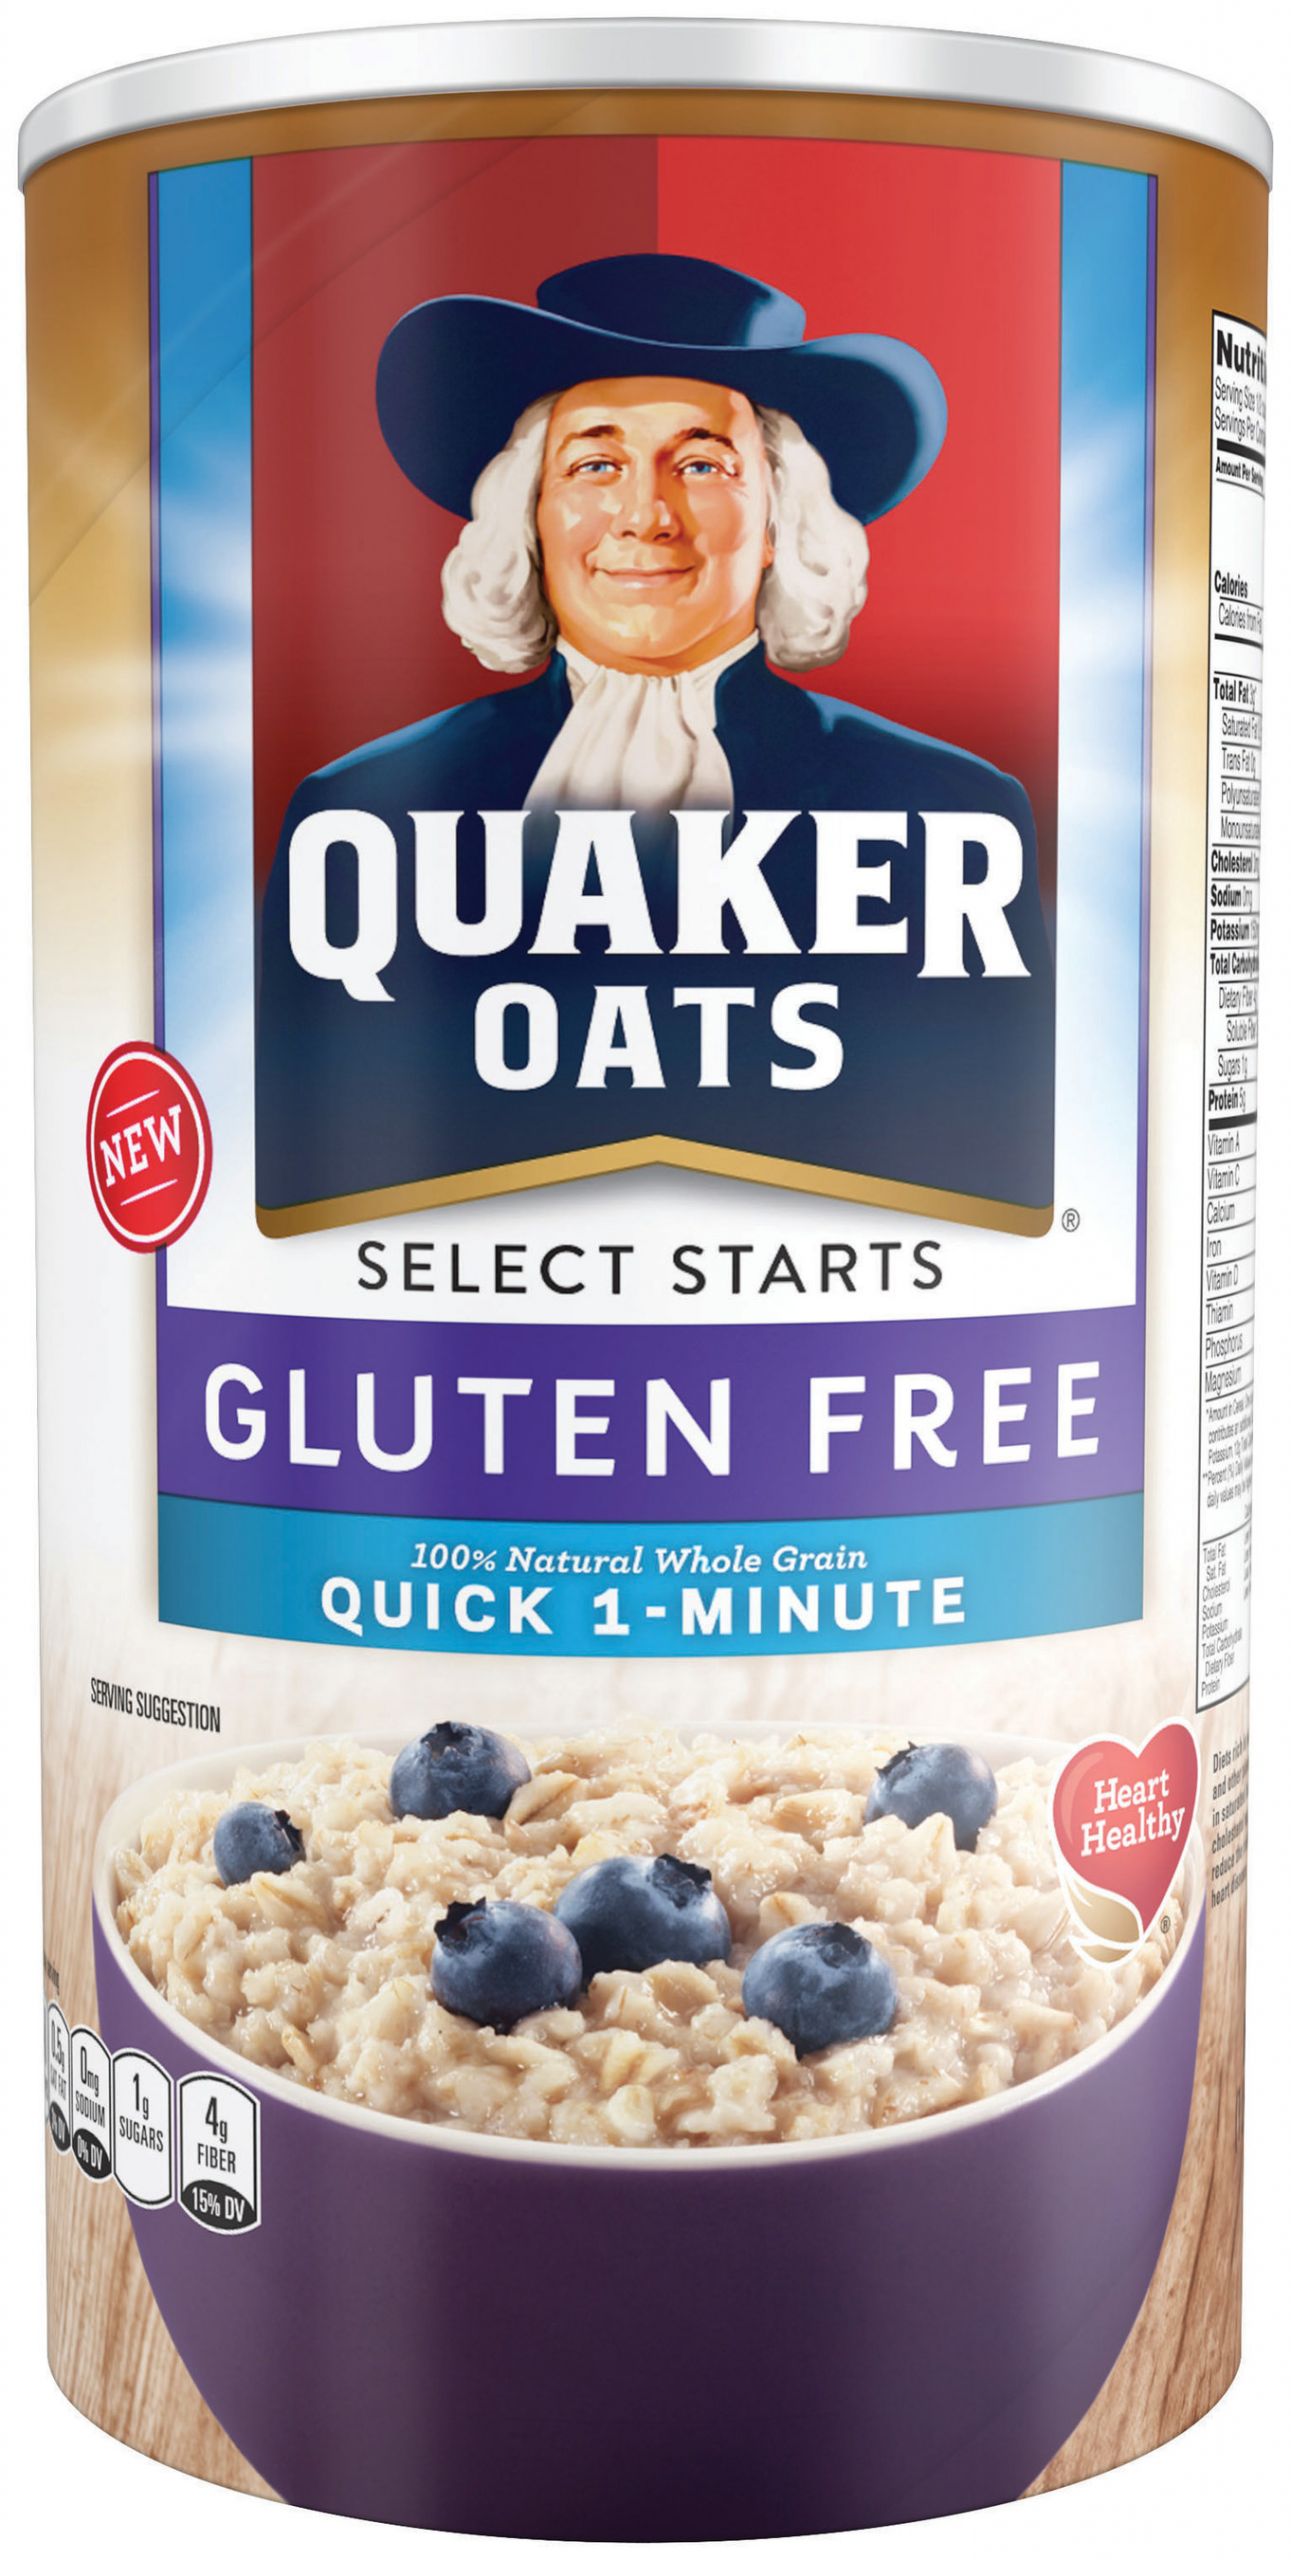 Quaker Oats Gluten Free
 Quaker Introduces New Great Tasting Gluten Free Oatmeal